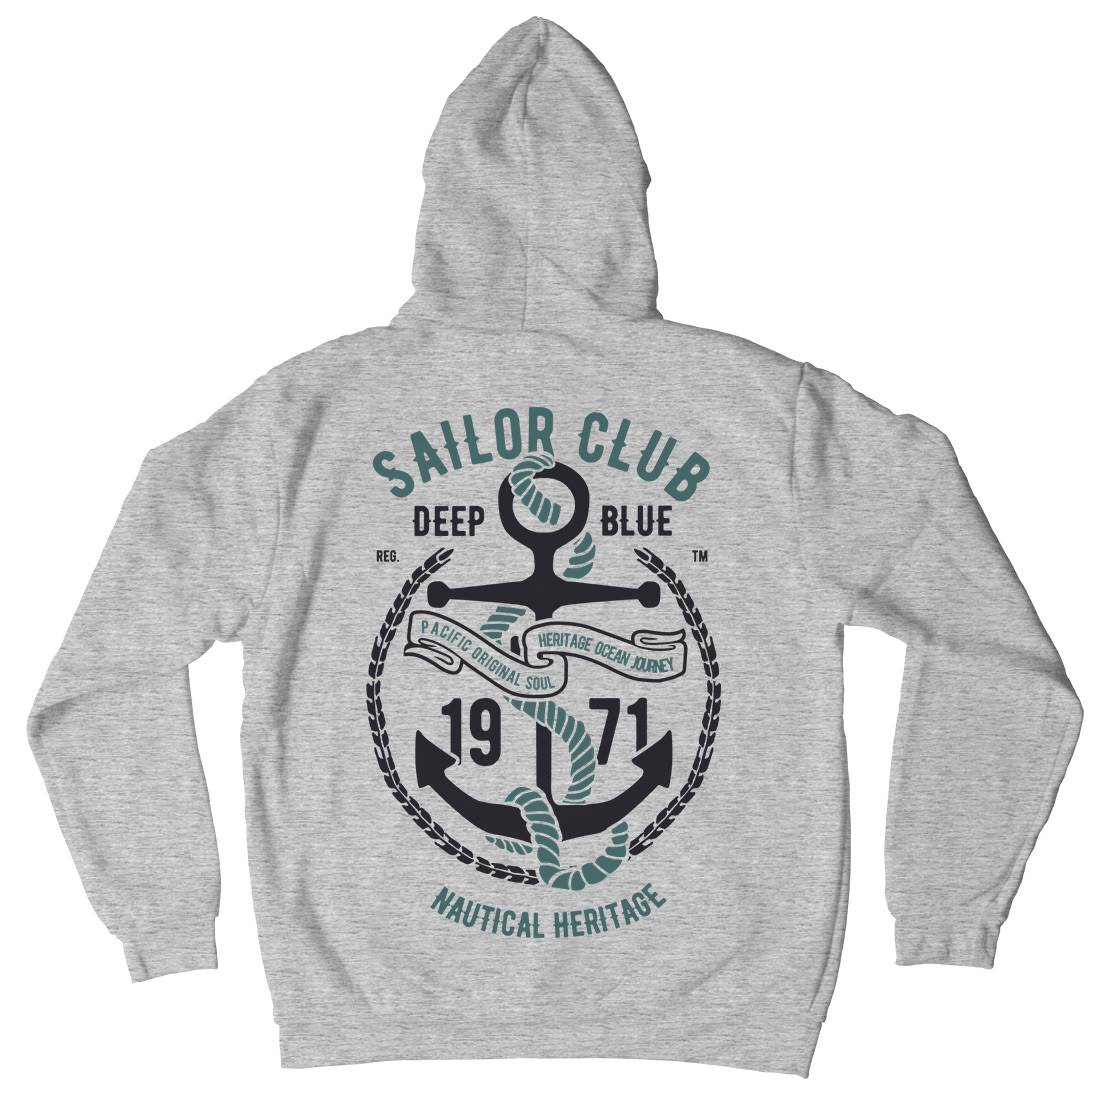 Sailor Club Mens Hoodie With Pocket Navy B445